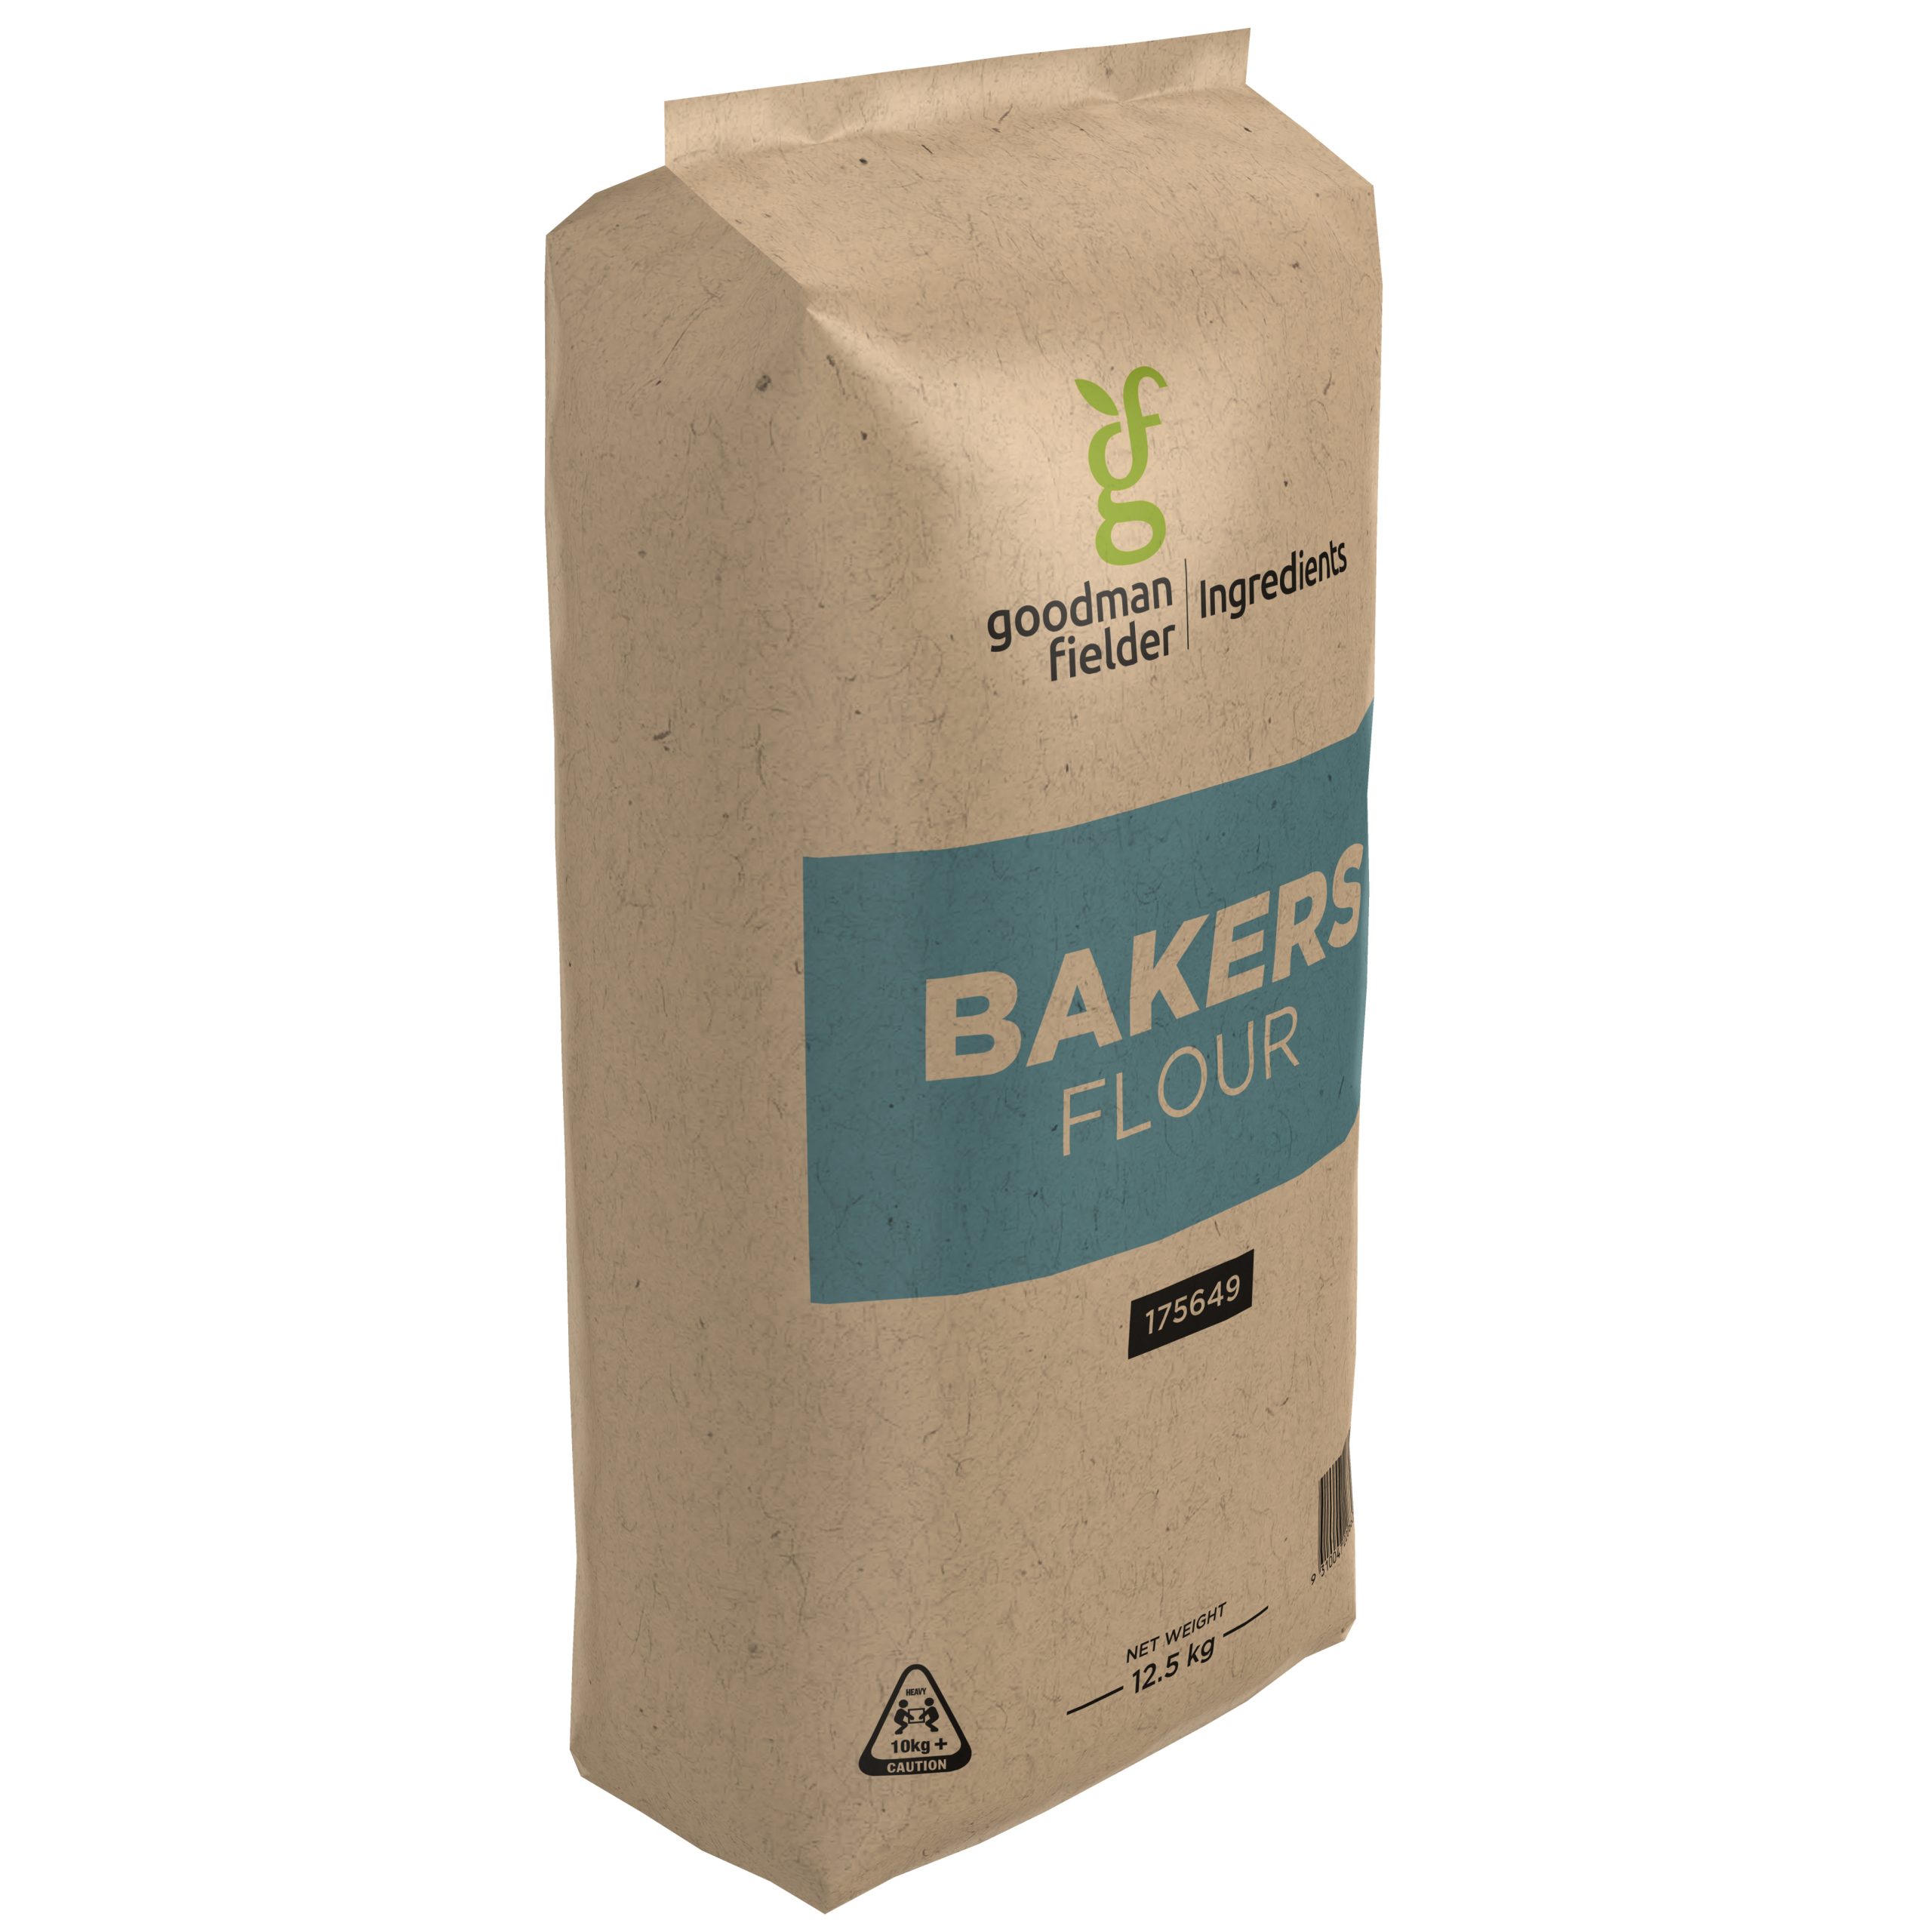 Goodman Fielder Ingredients Bakers Flour 12.5kg product photo